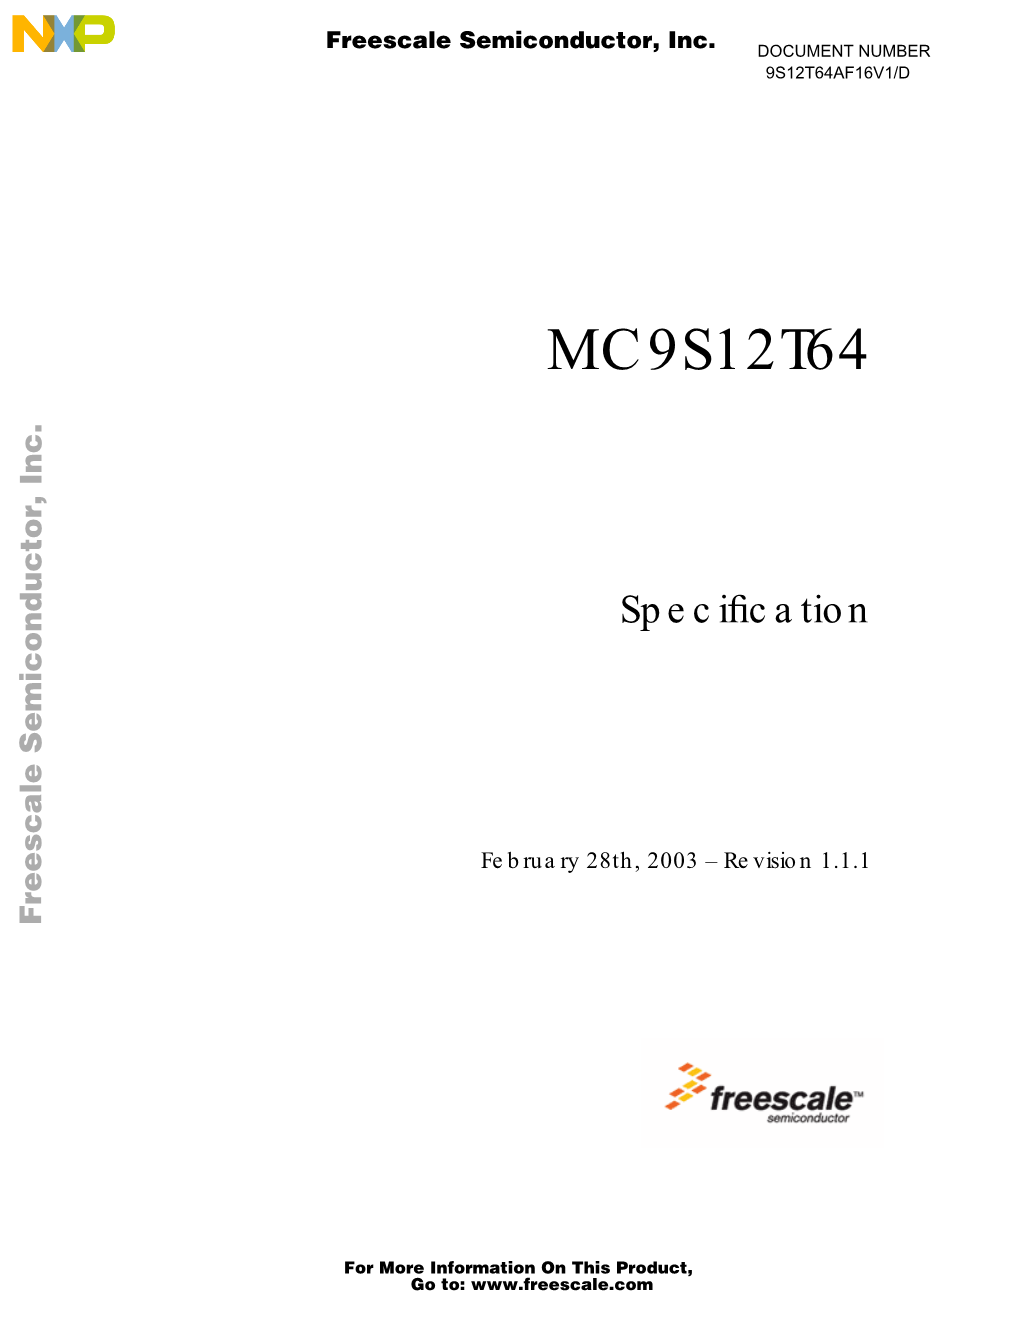 MC9S12T64 Specification